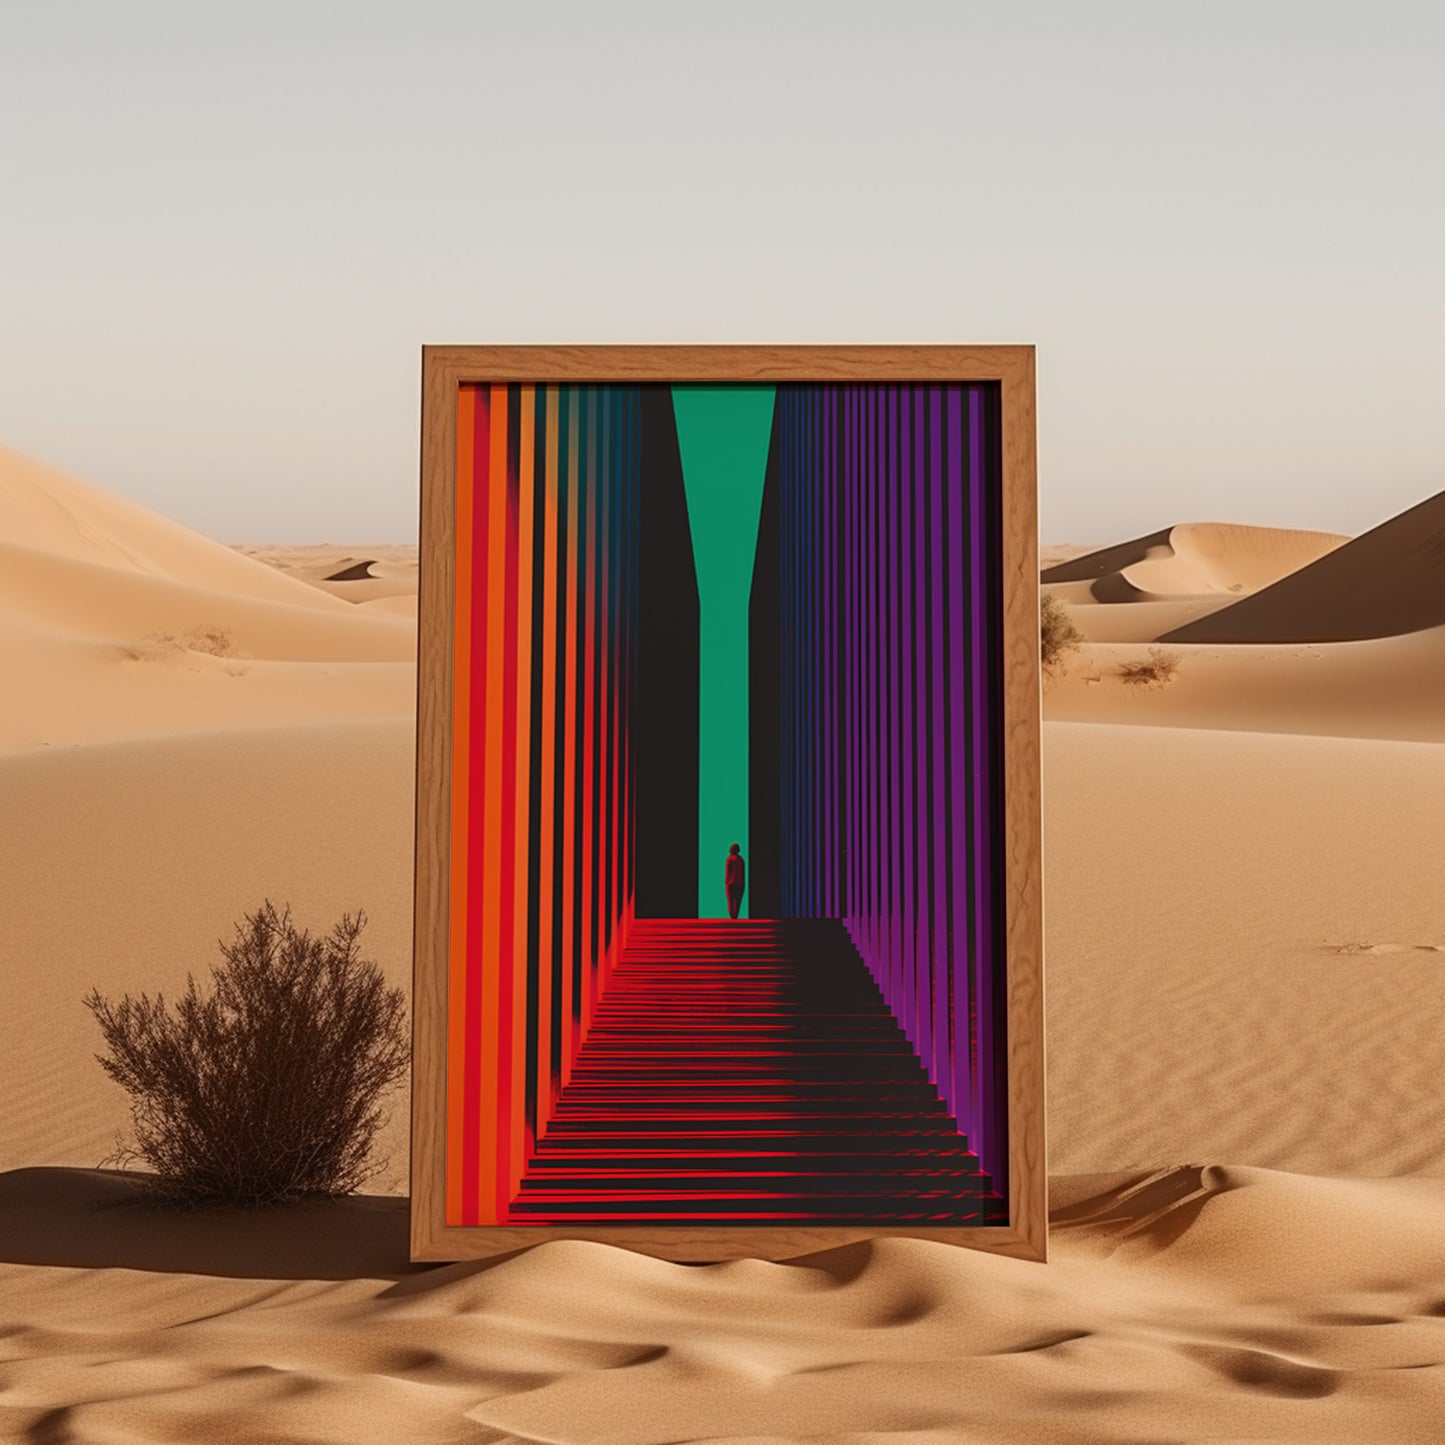 A colorful geometric corridor installation in a desert landscape.